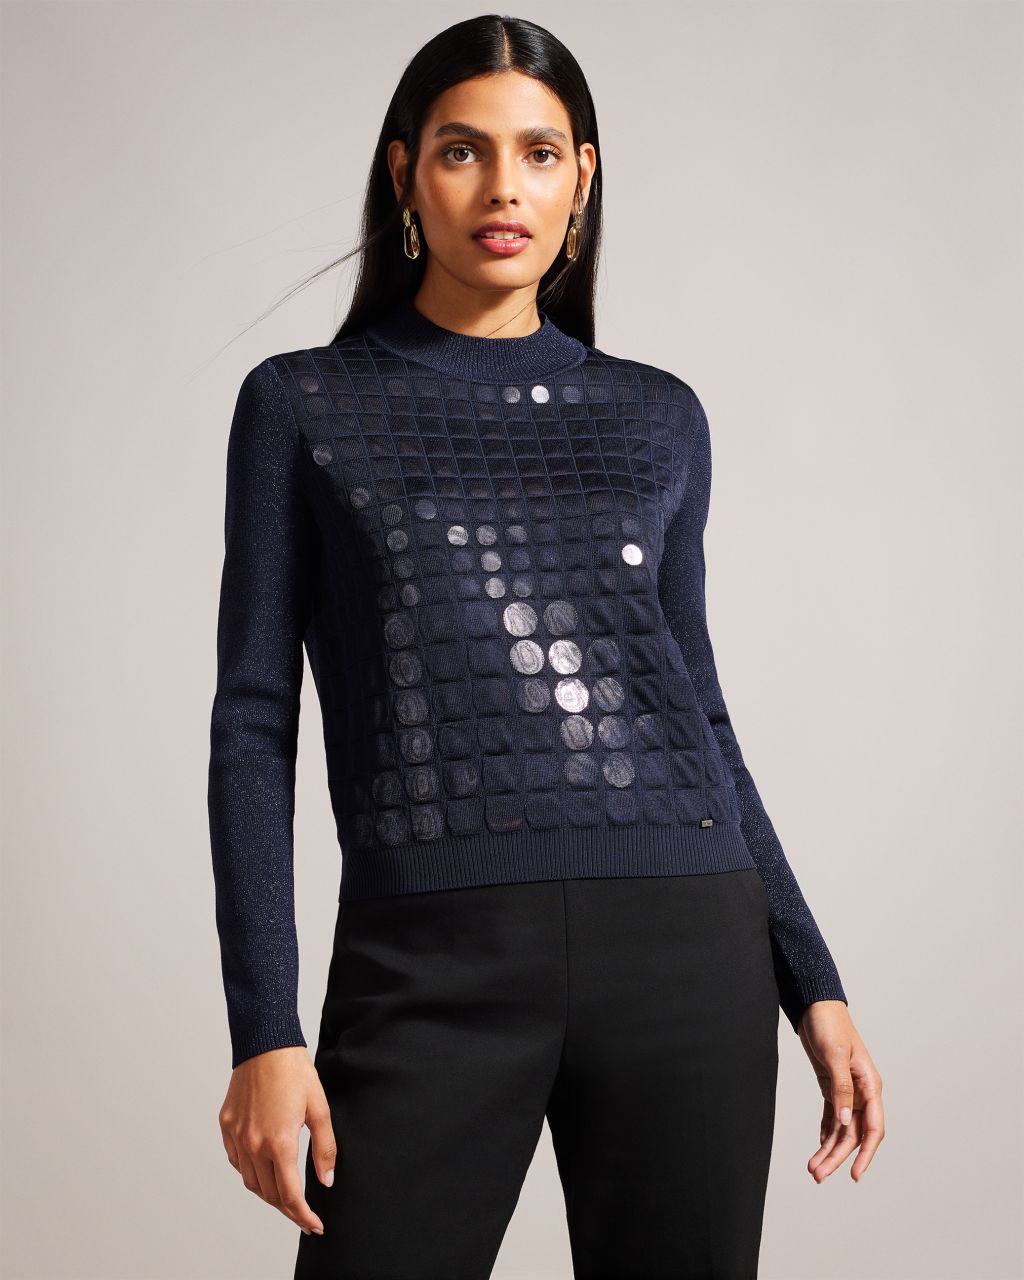 Women's Knitted Jumper With Metallic Spot Design in Blue, Yivonne